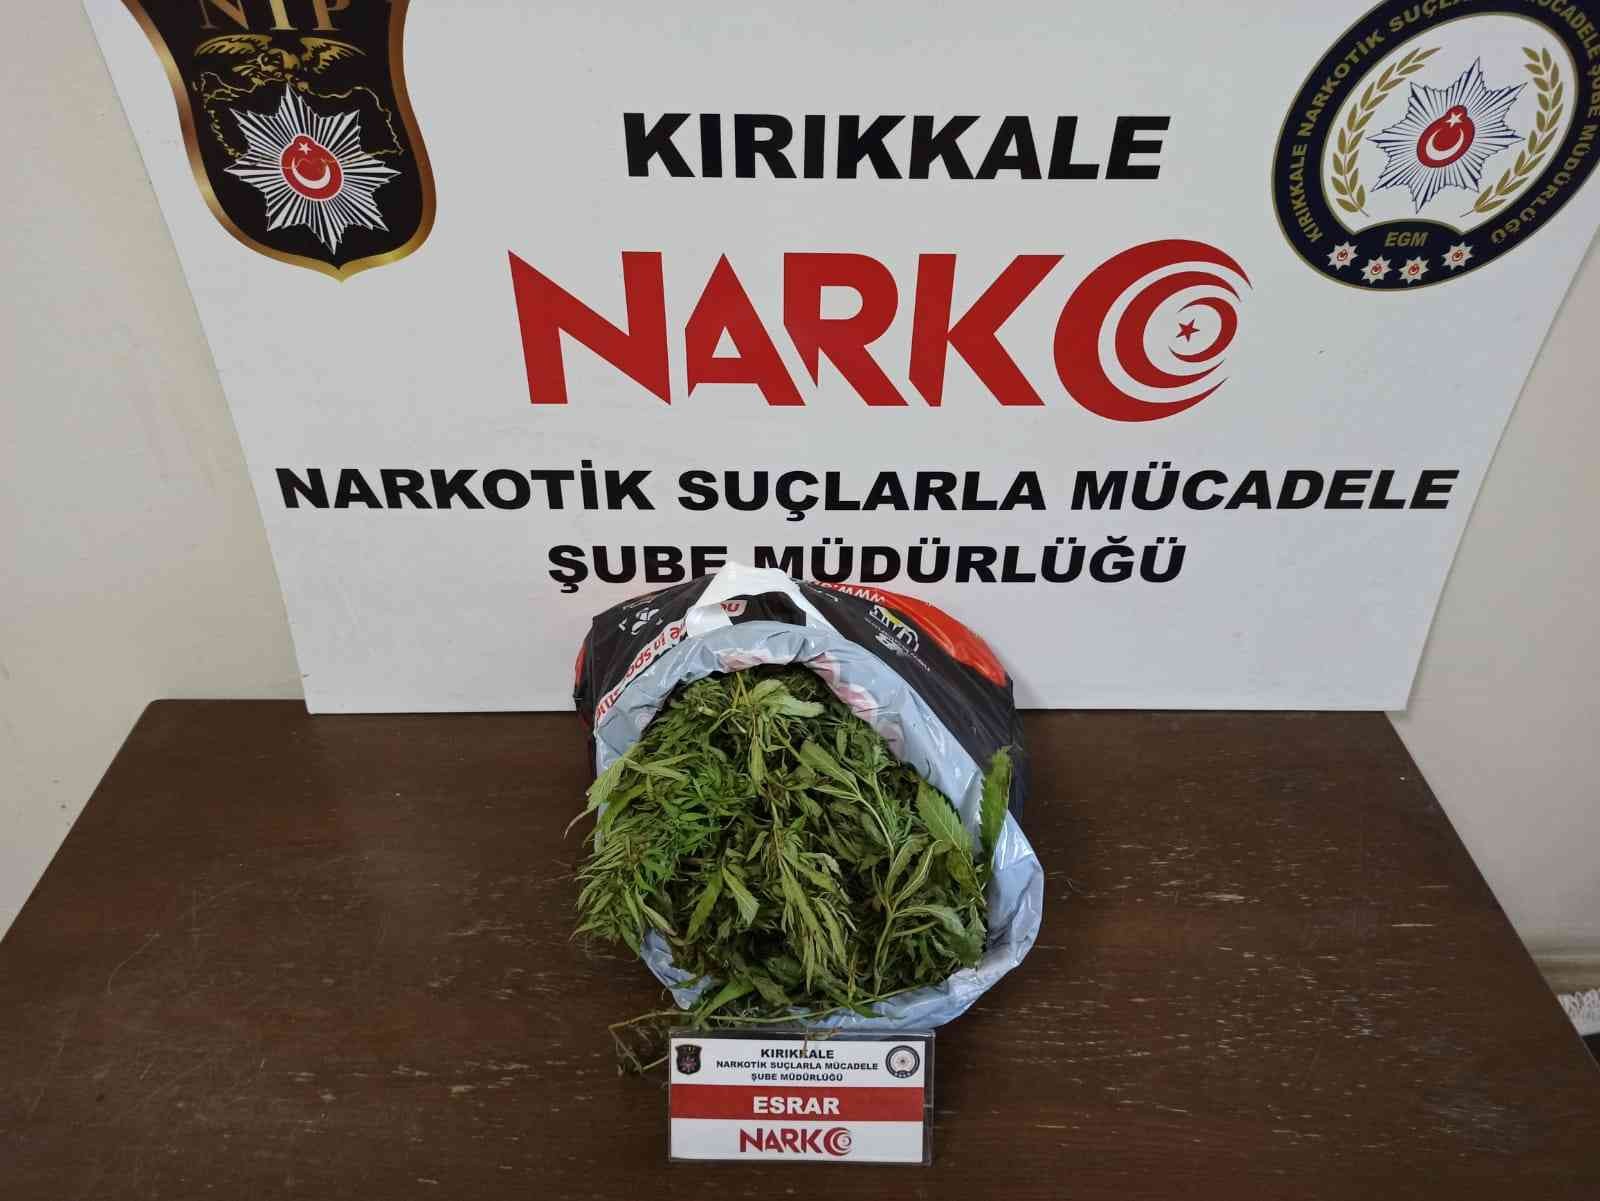 Kırıkkale’de 1 kilo 410 gram esrar ele geçirildi #kirikkale